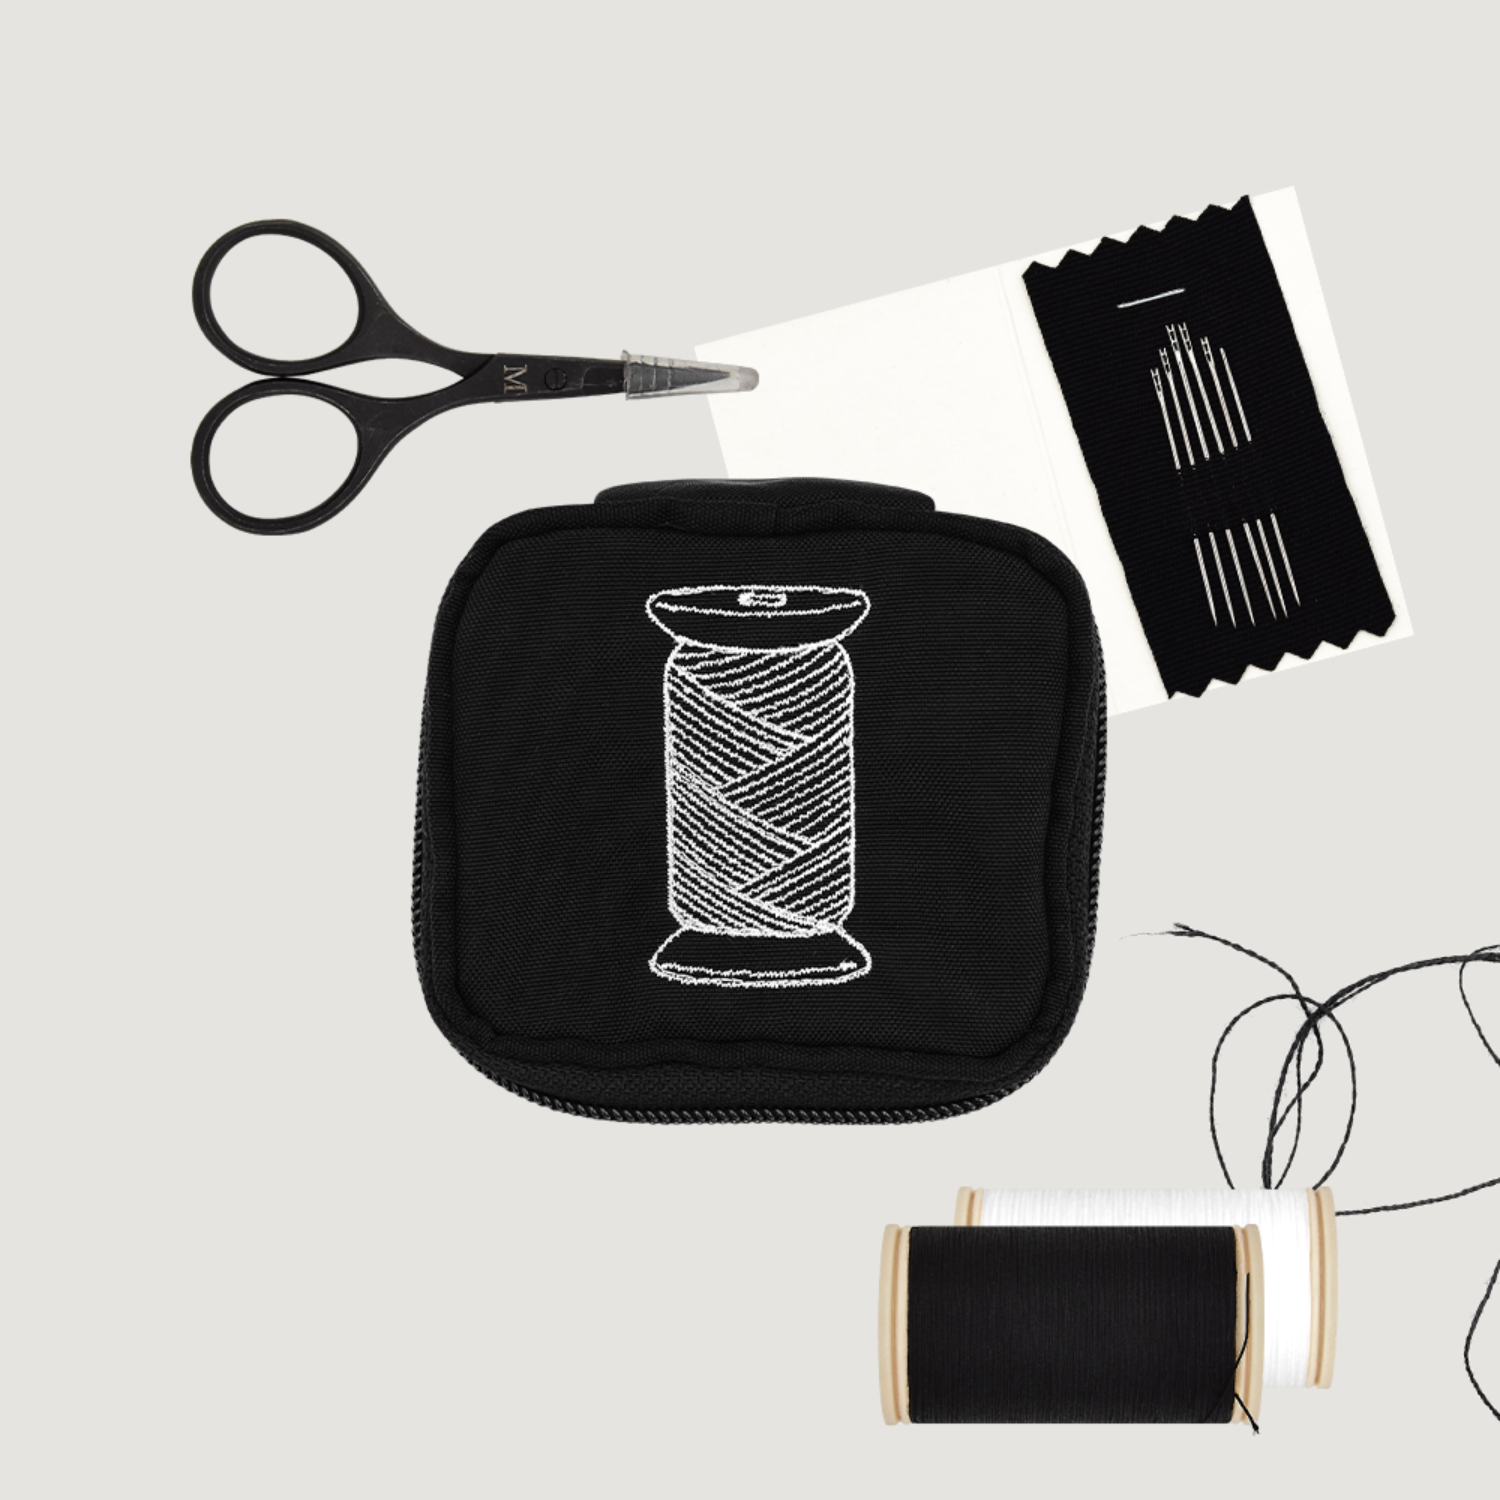 KBP Fabrics Sewing Kit